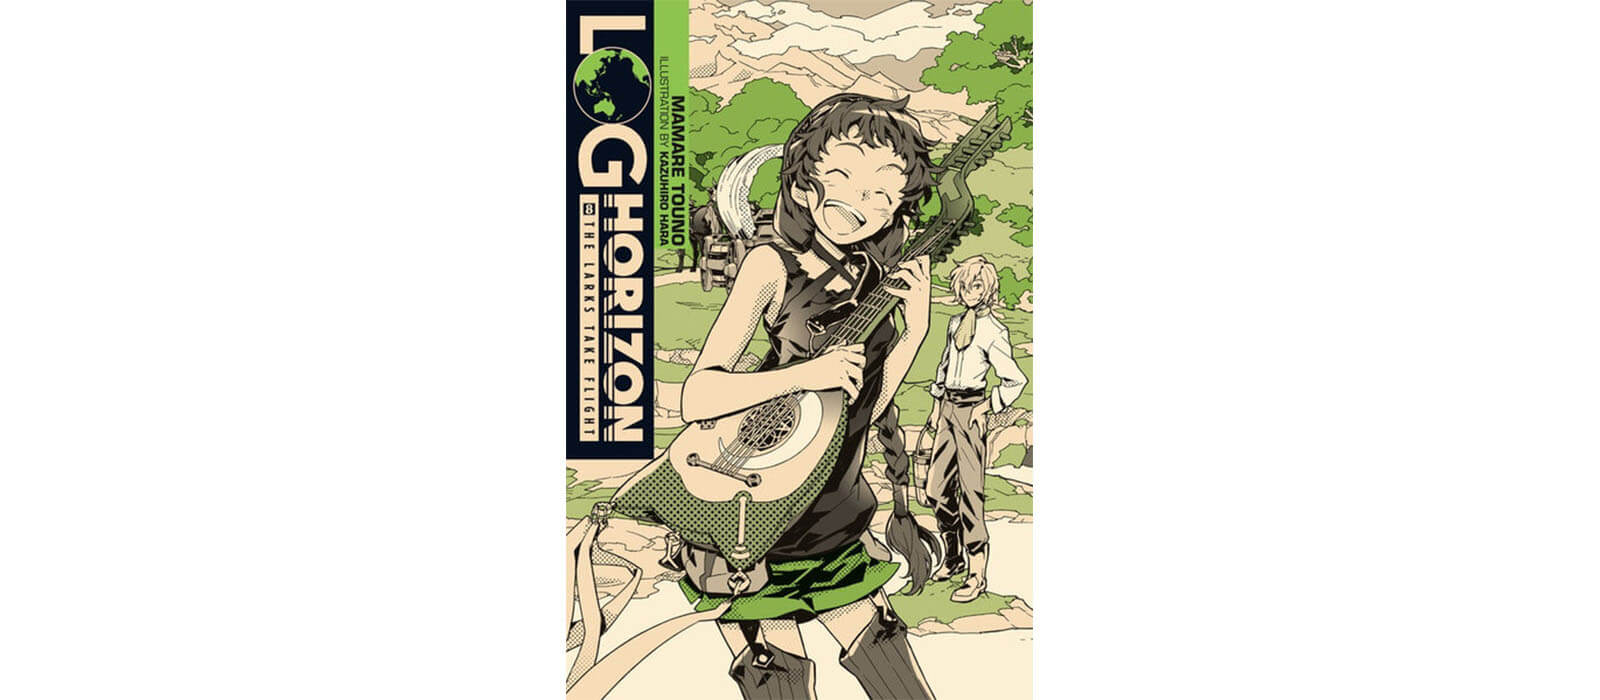 June 2017 Manga Releases - Log Horizon Vol. 8 by Mamare Touno